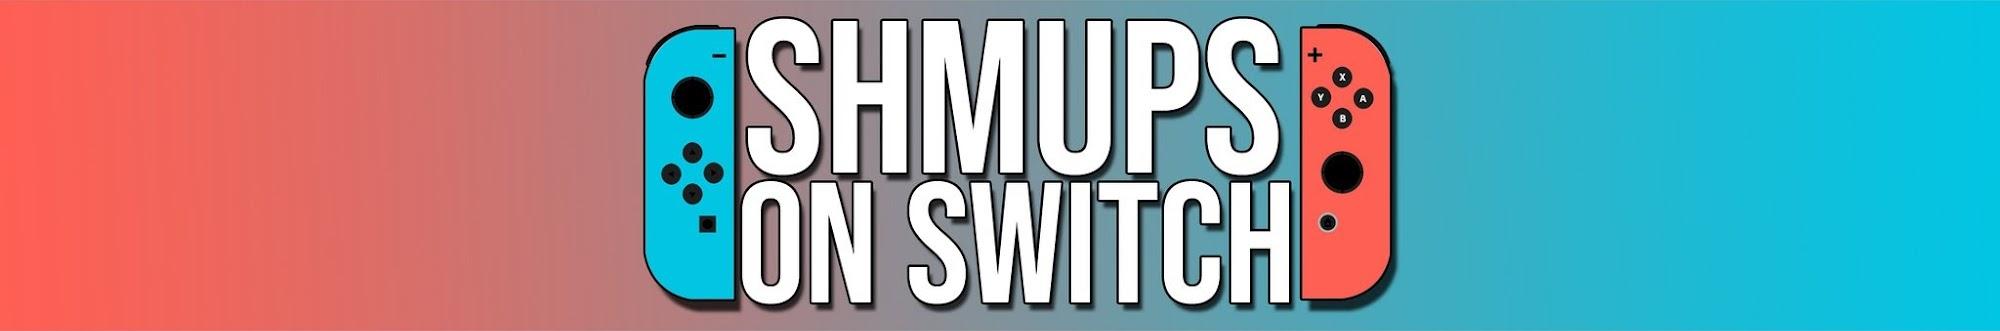 Shmups On Switch